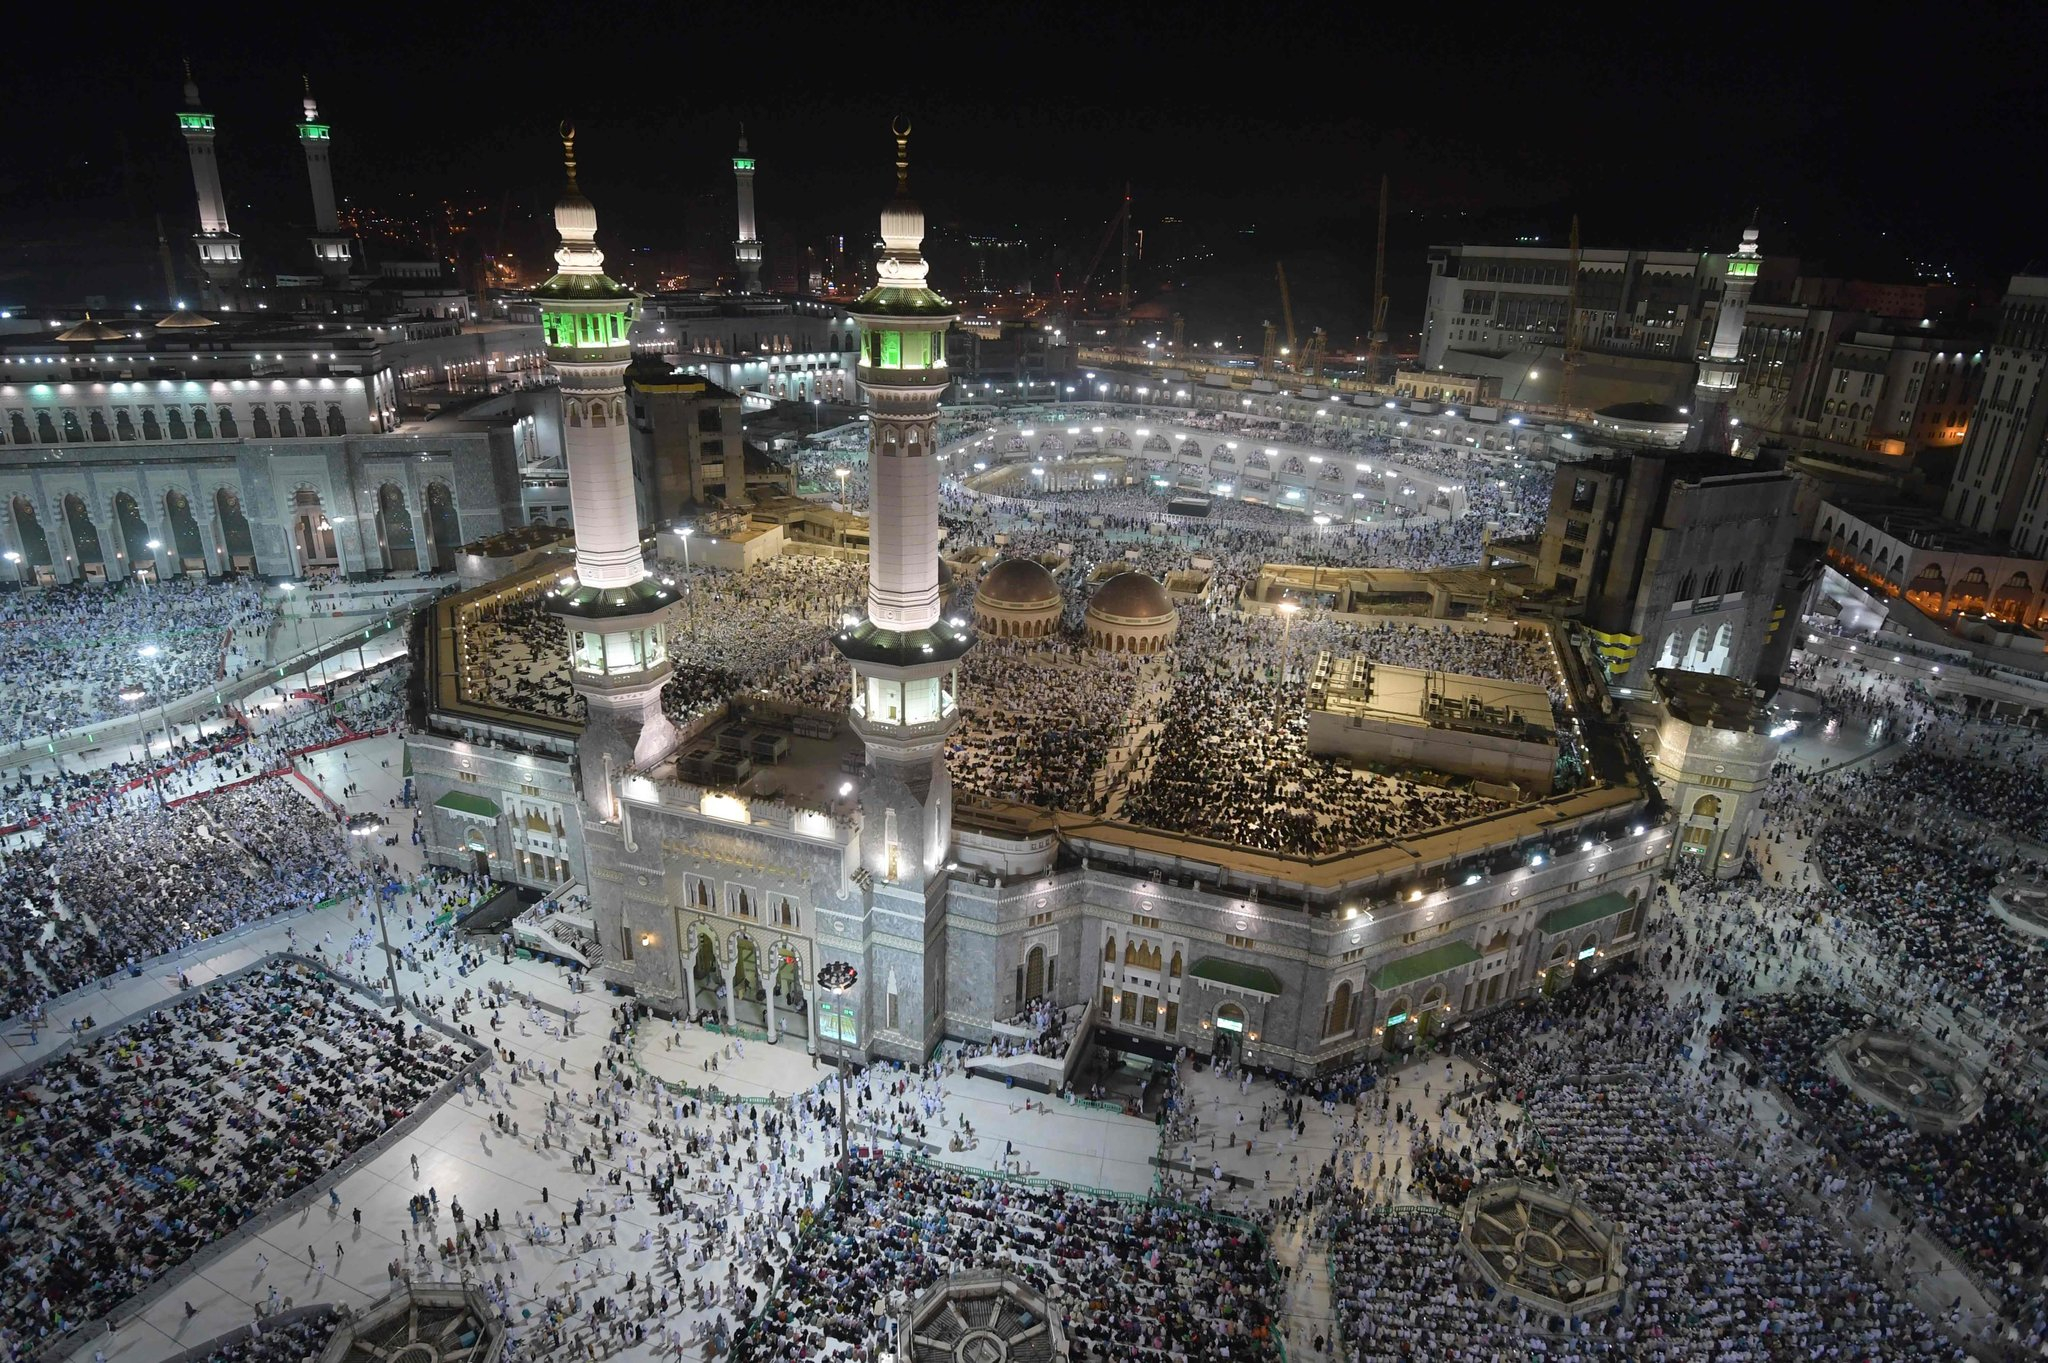 can i visit saudi arabia during hajj